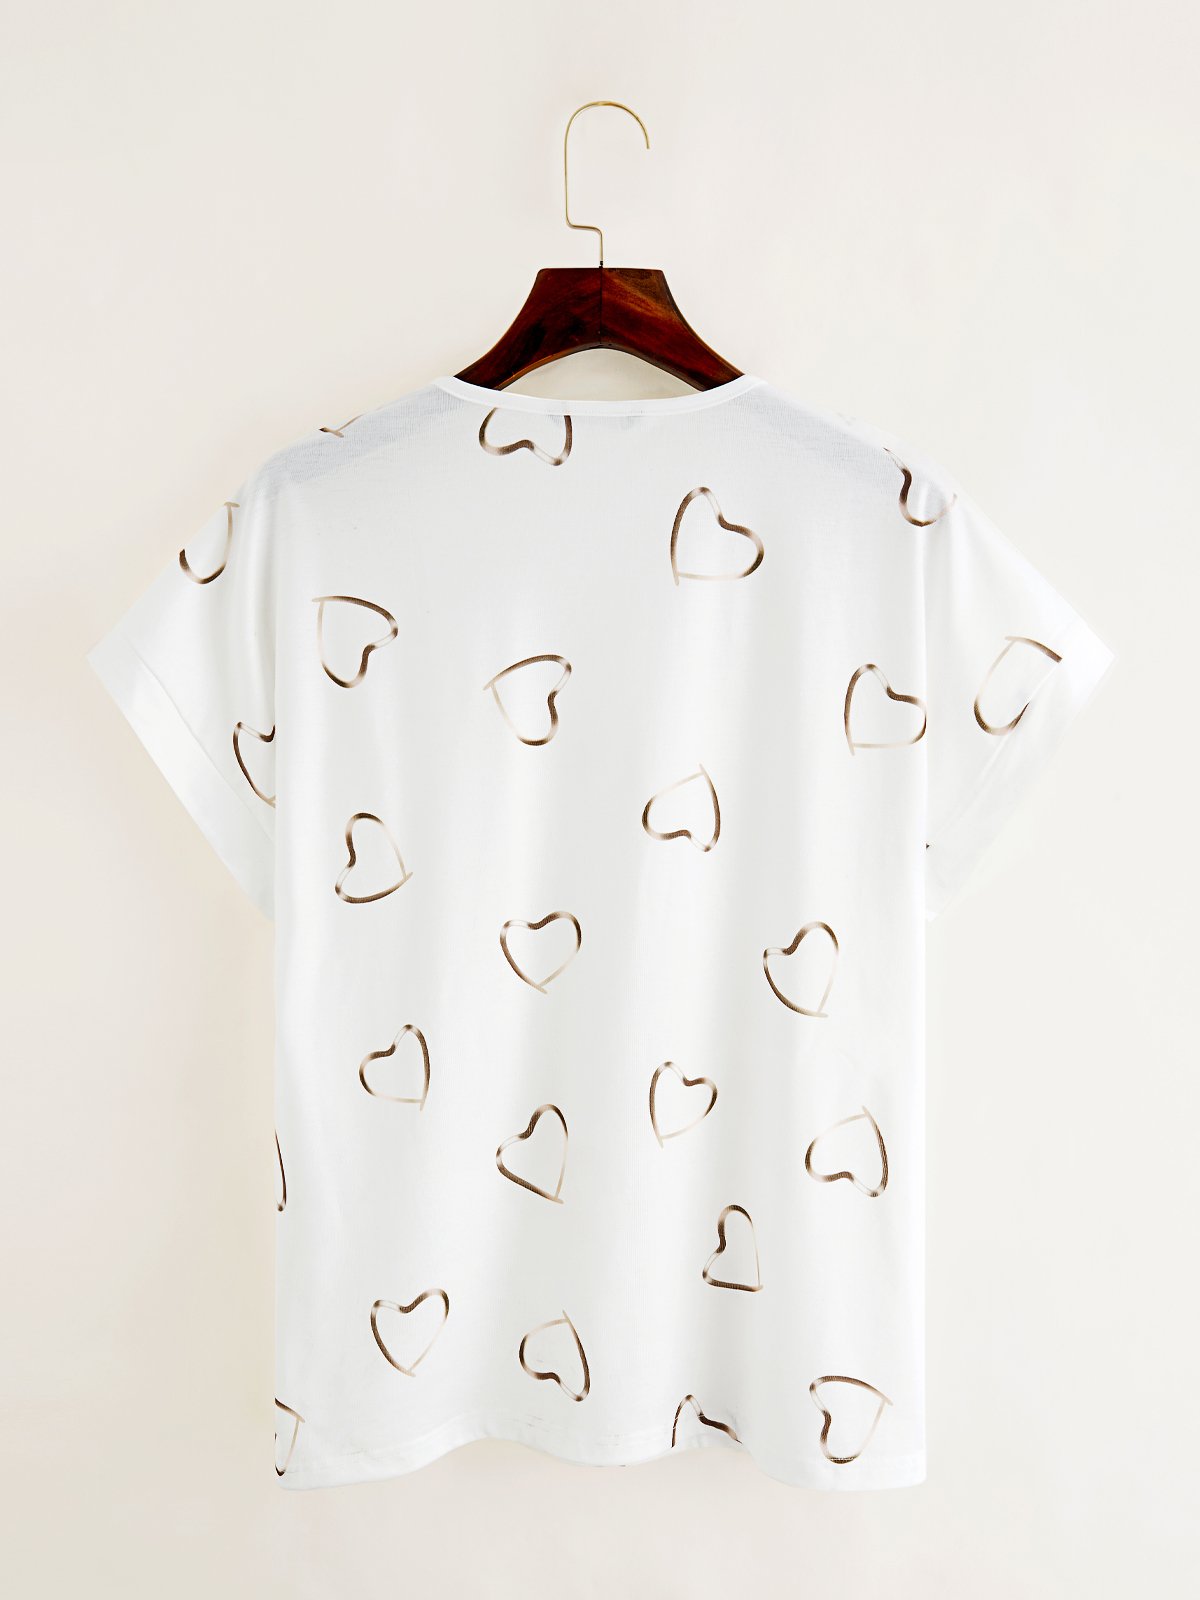 Cotton-Blend V Neck Sexy Heart/cordate T-shirt